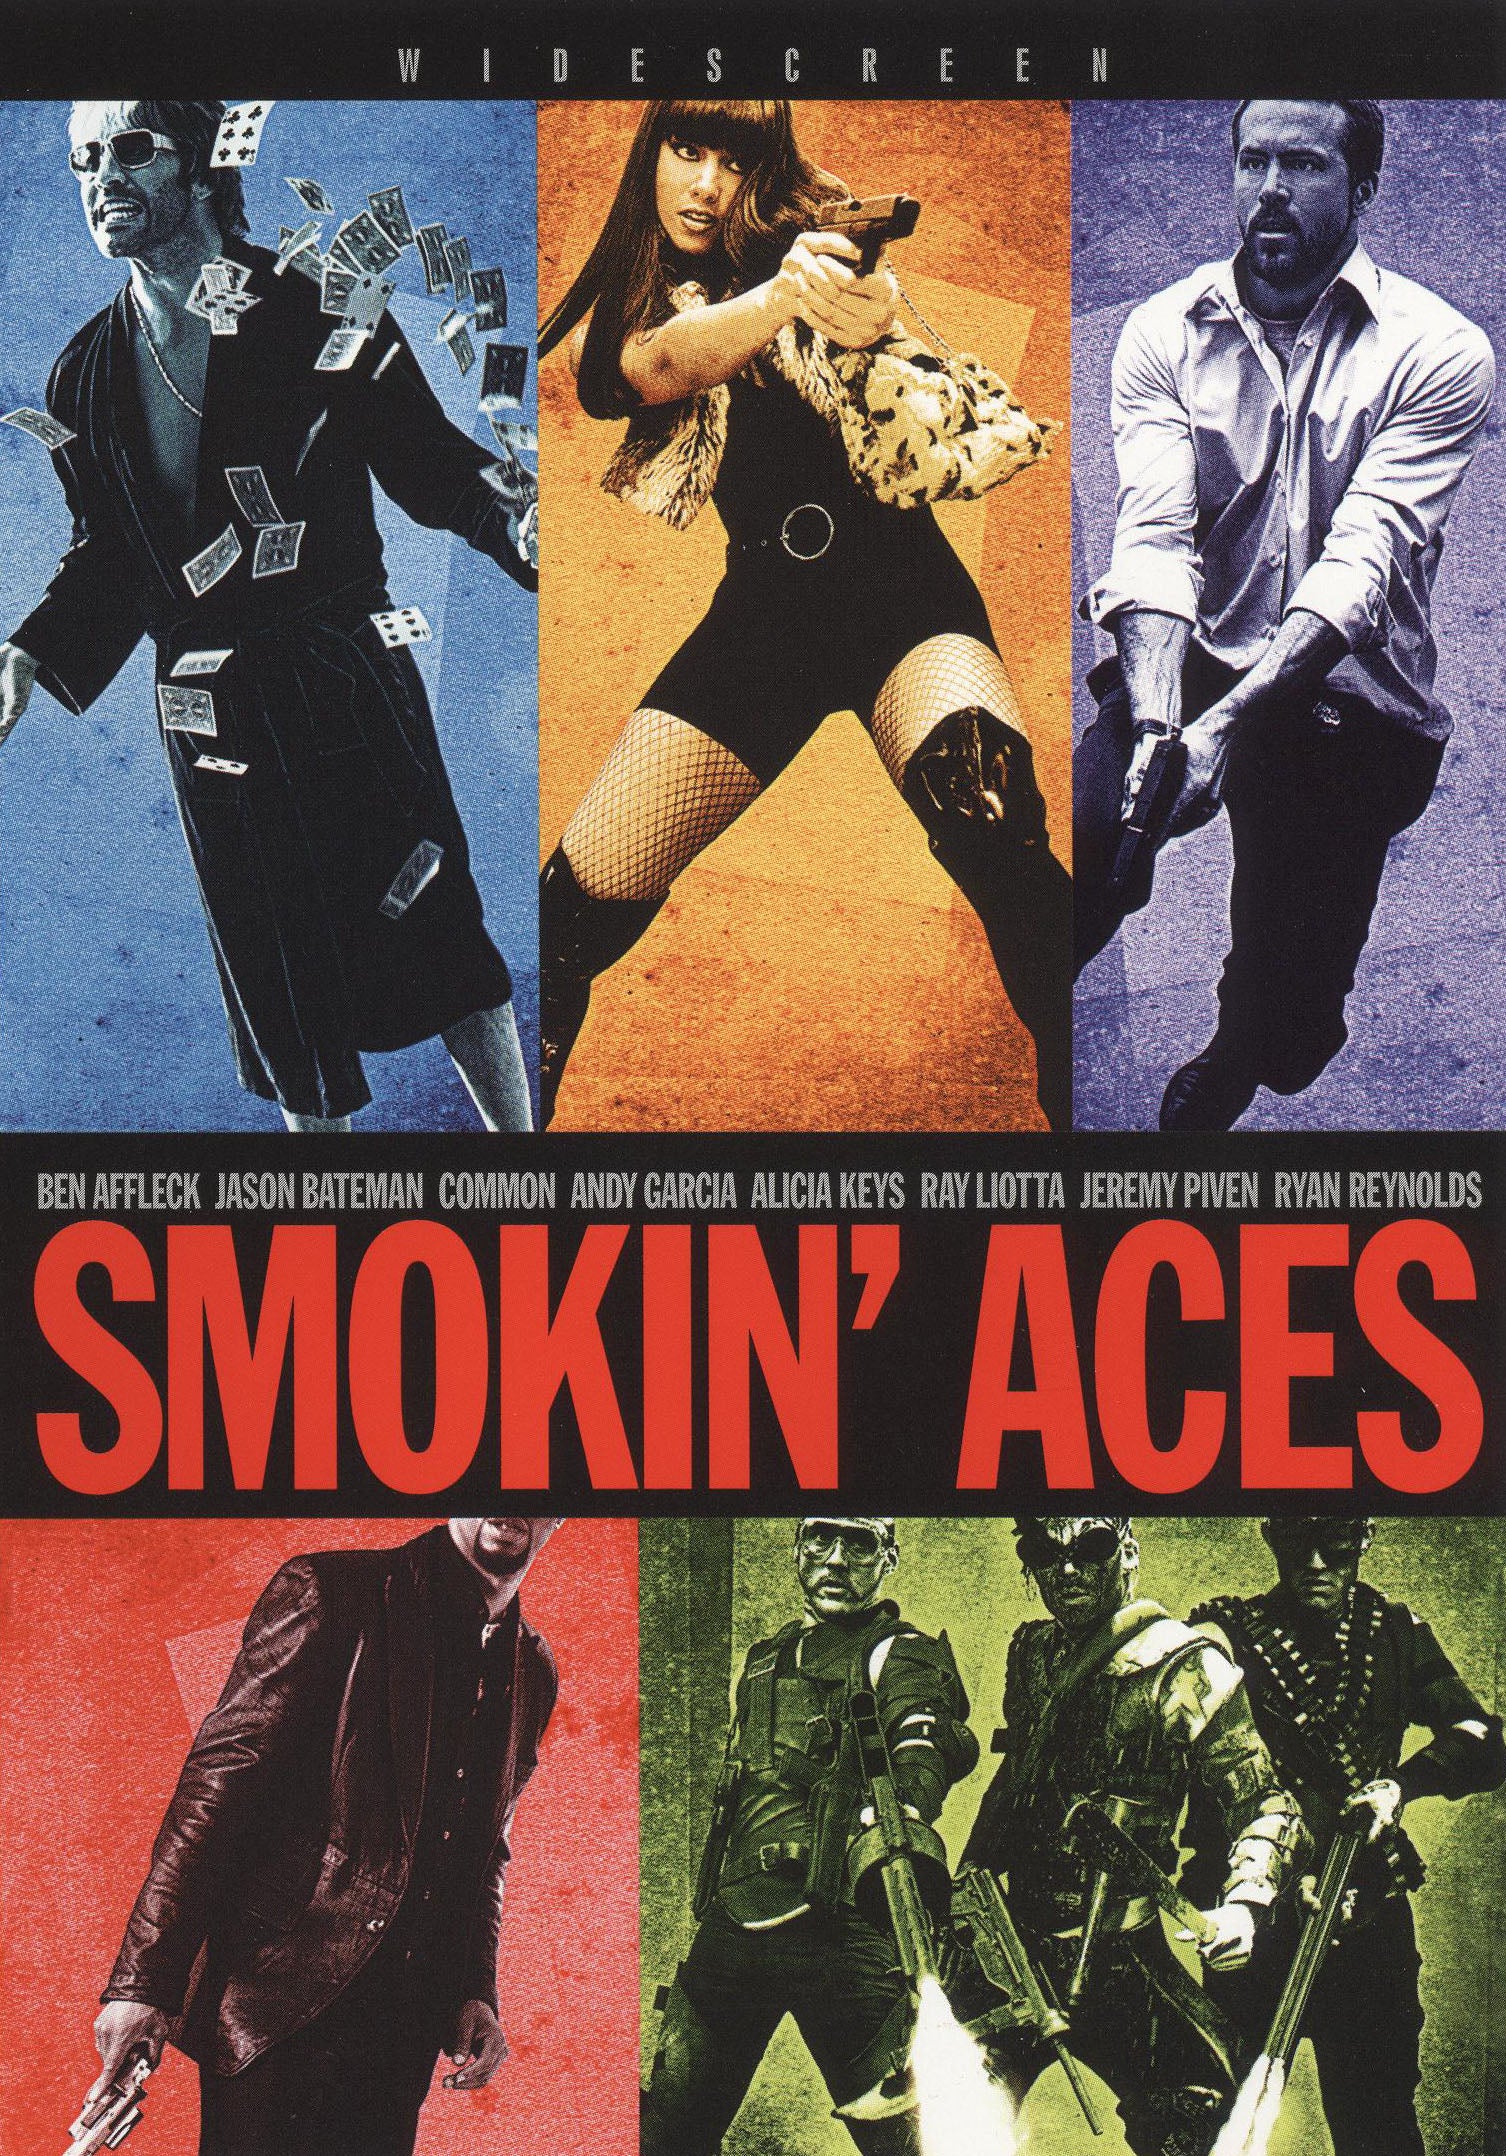 Smokin Aces (USA Import) cover art